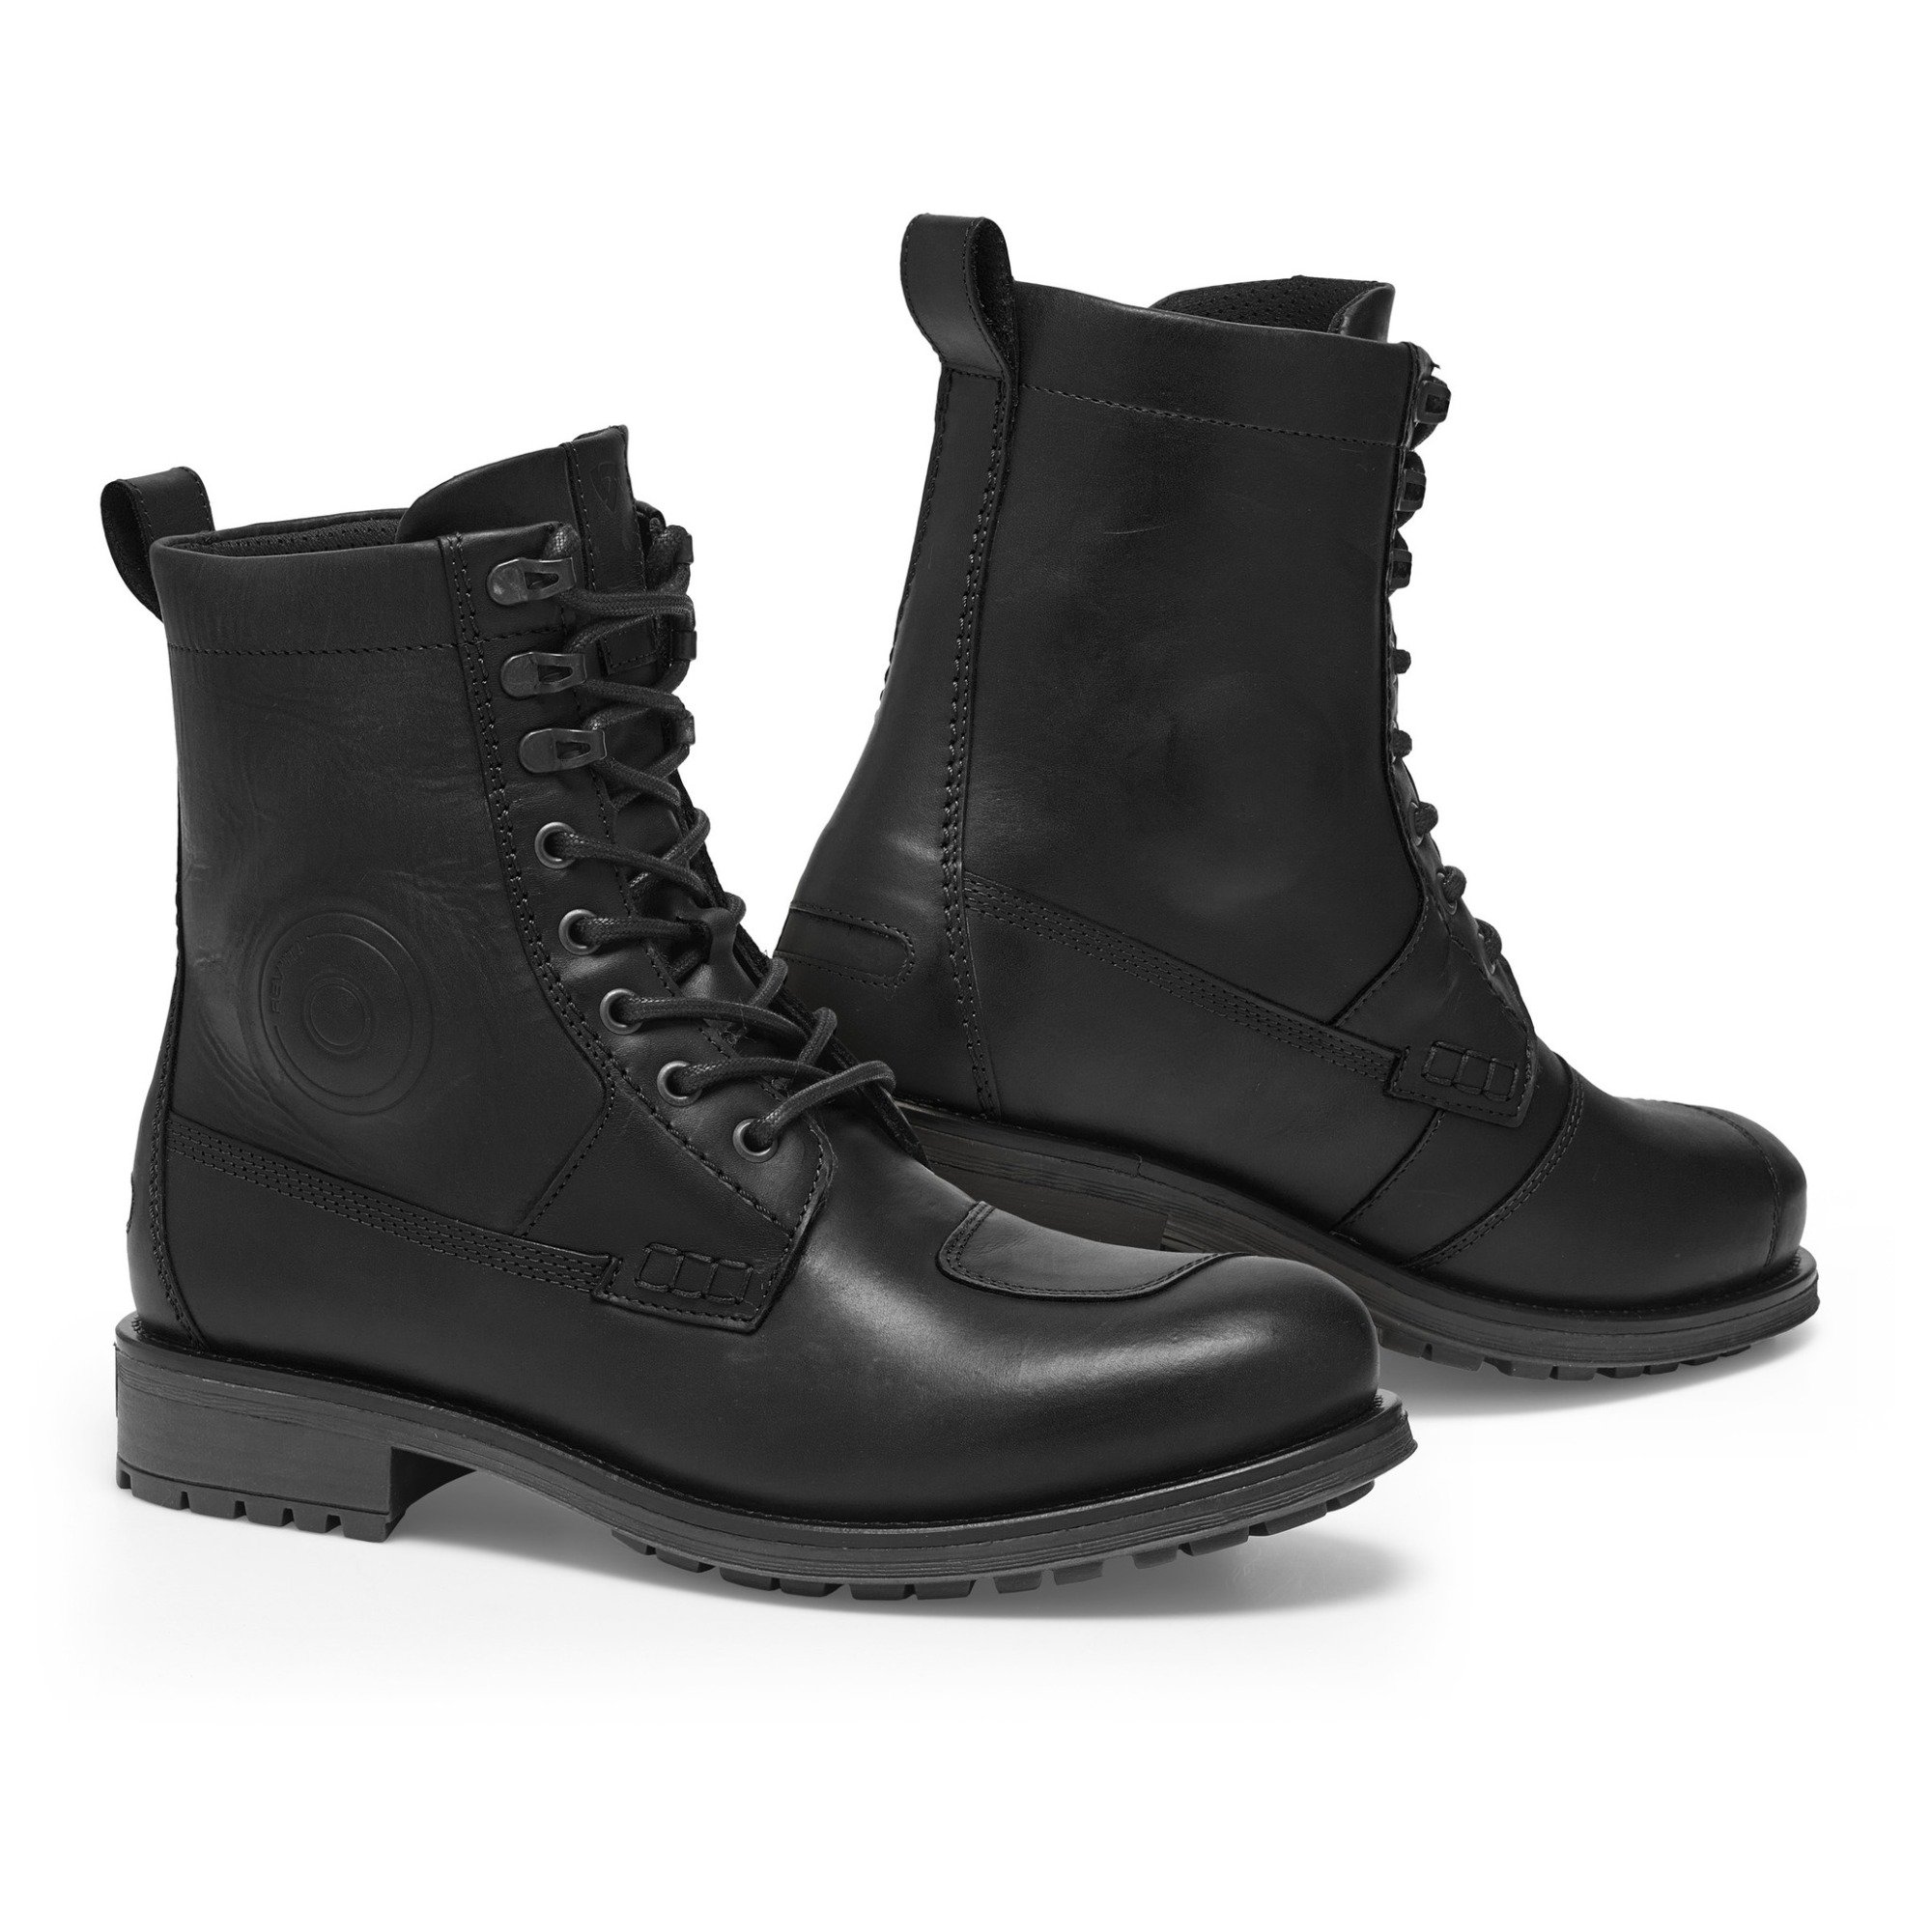 Image of REV'IT! Portland Shoes Black Size 42 ID 8700001293600